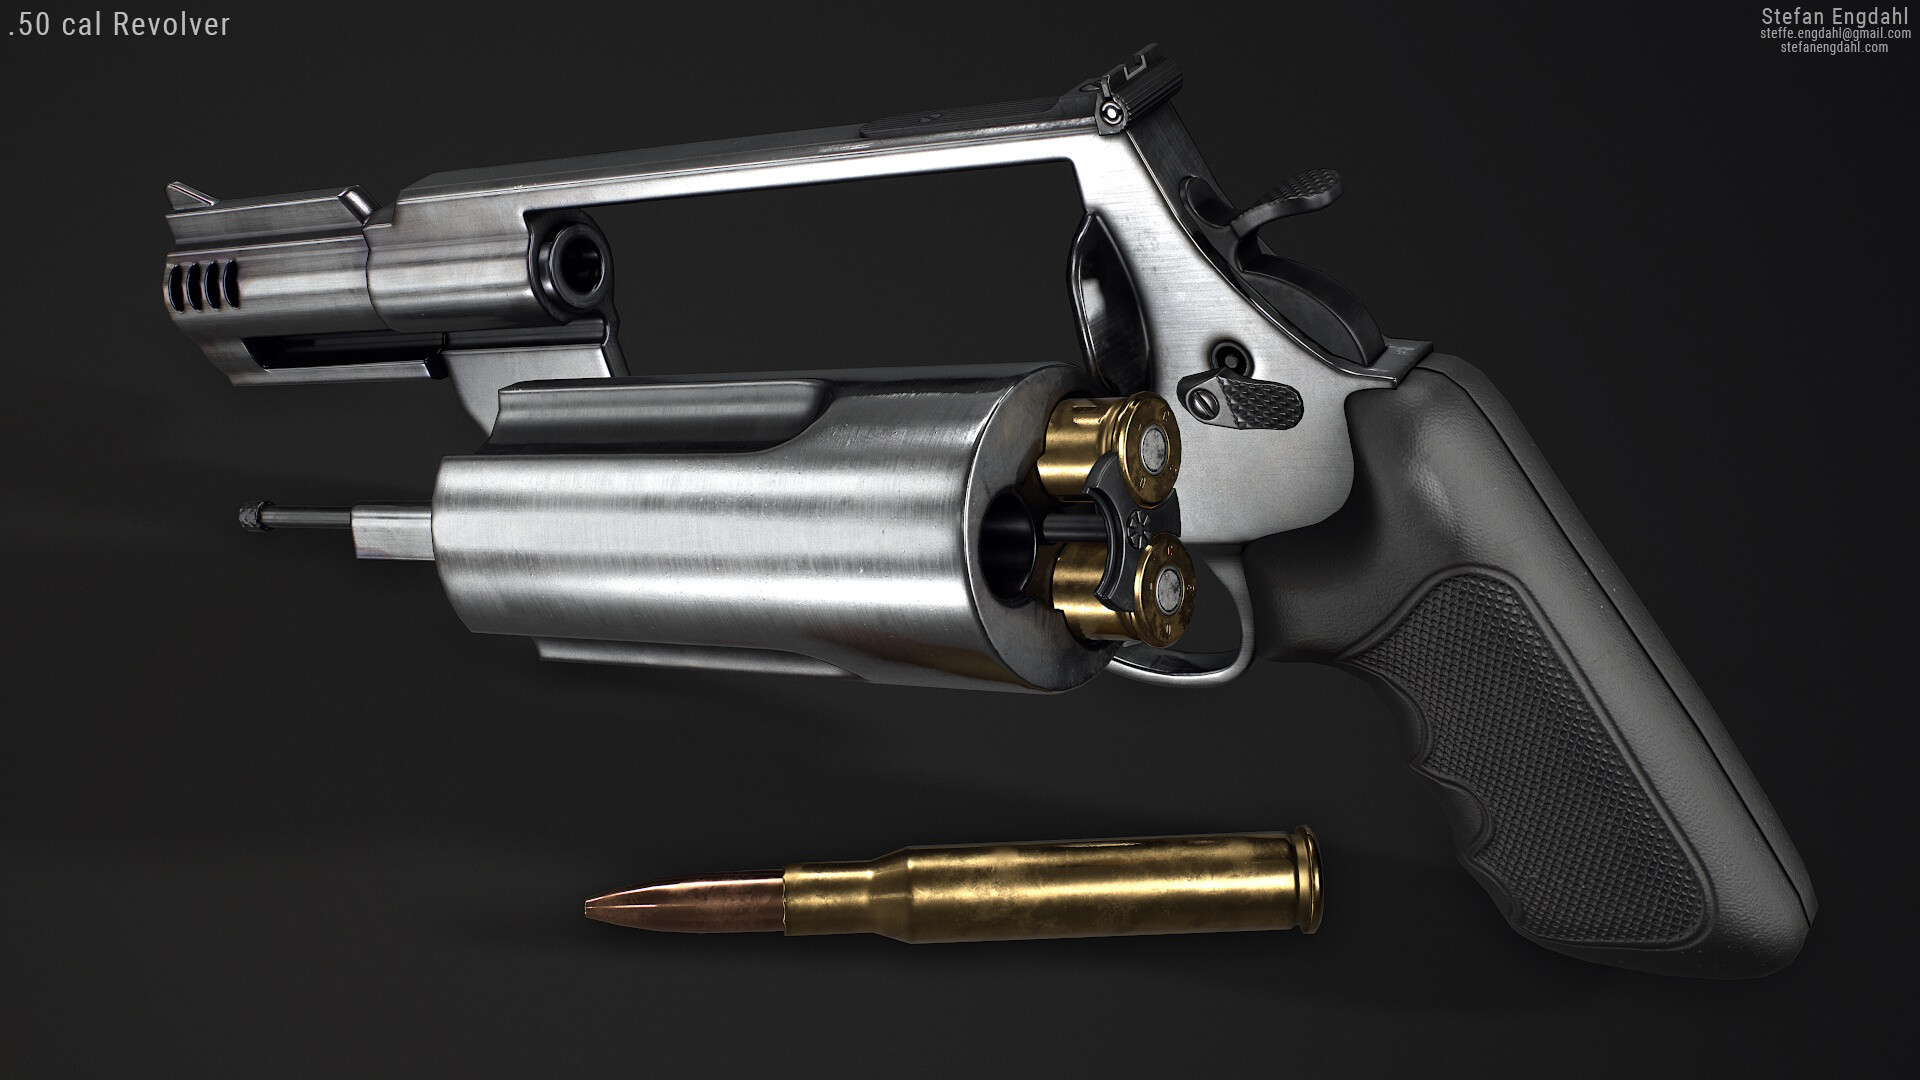 Stefan Engdahl S Portfolio 50 Cal Revolver